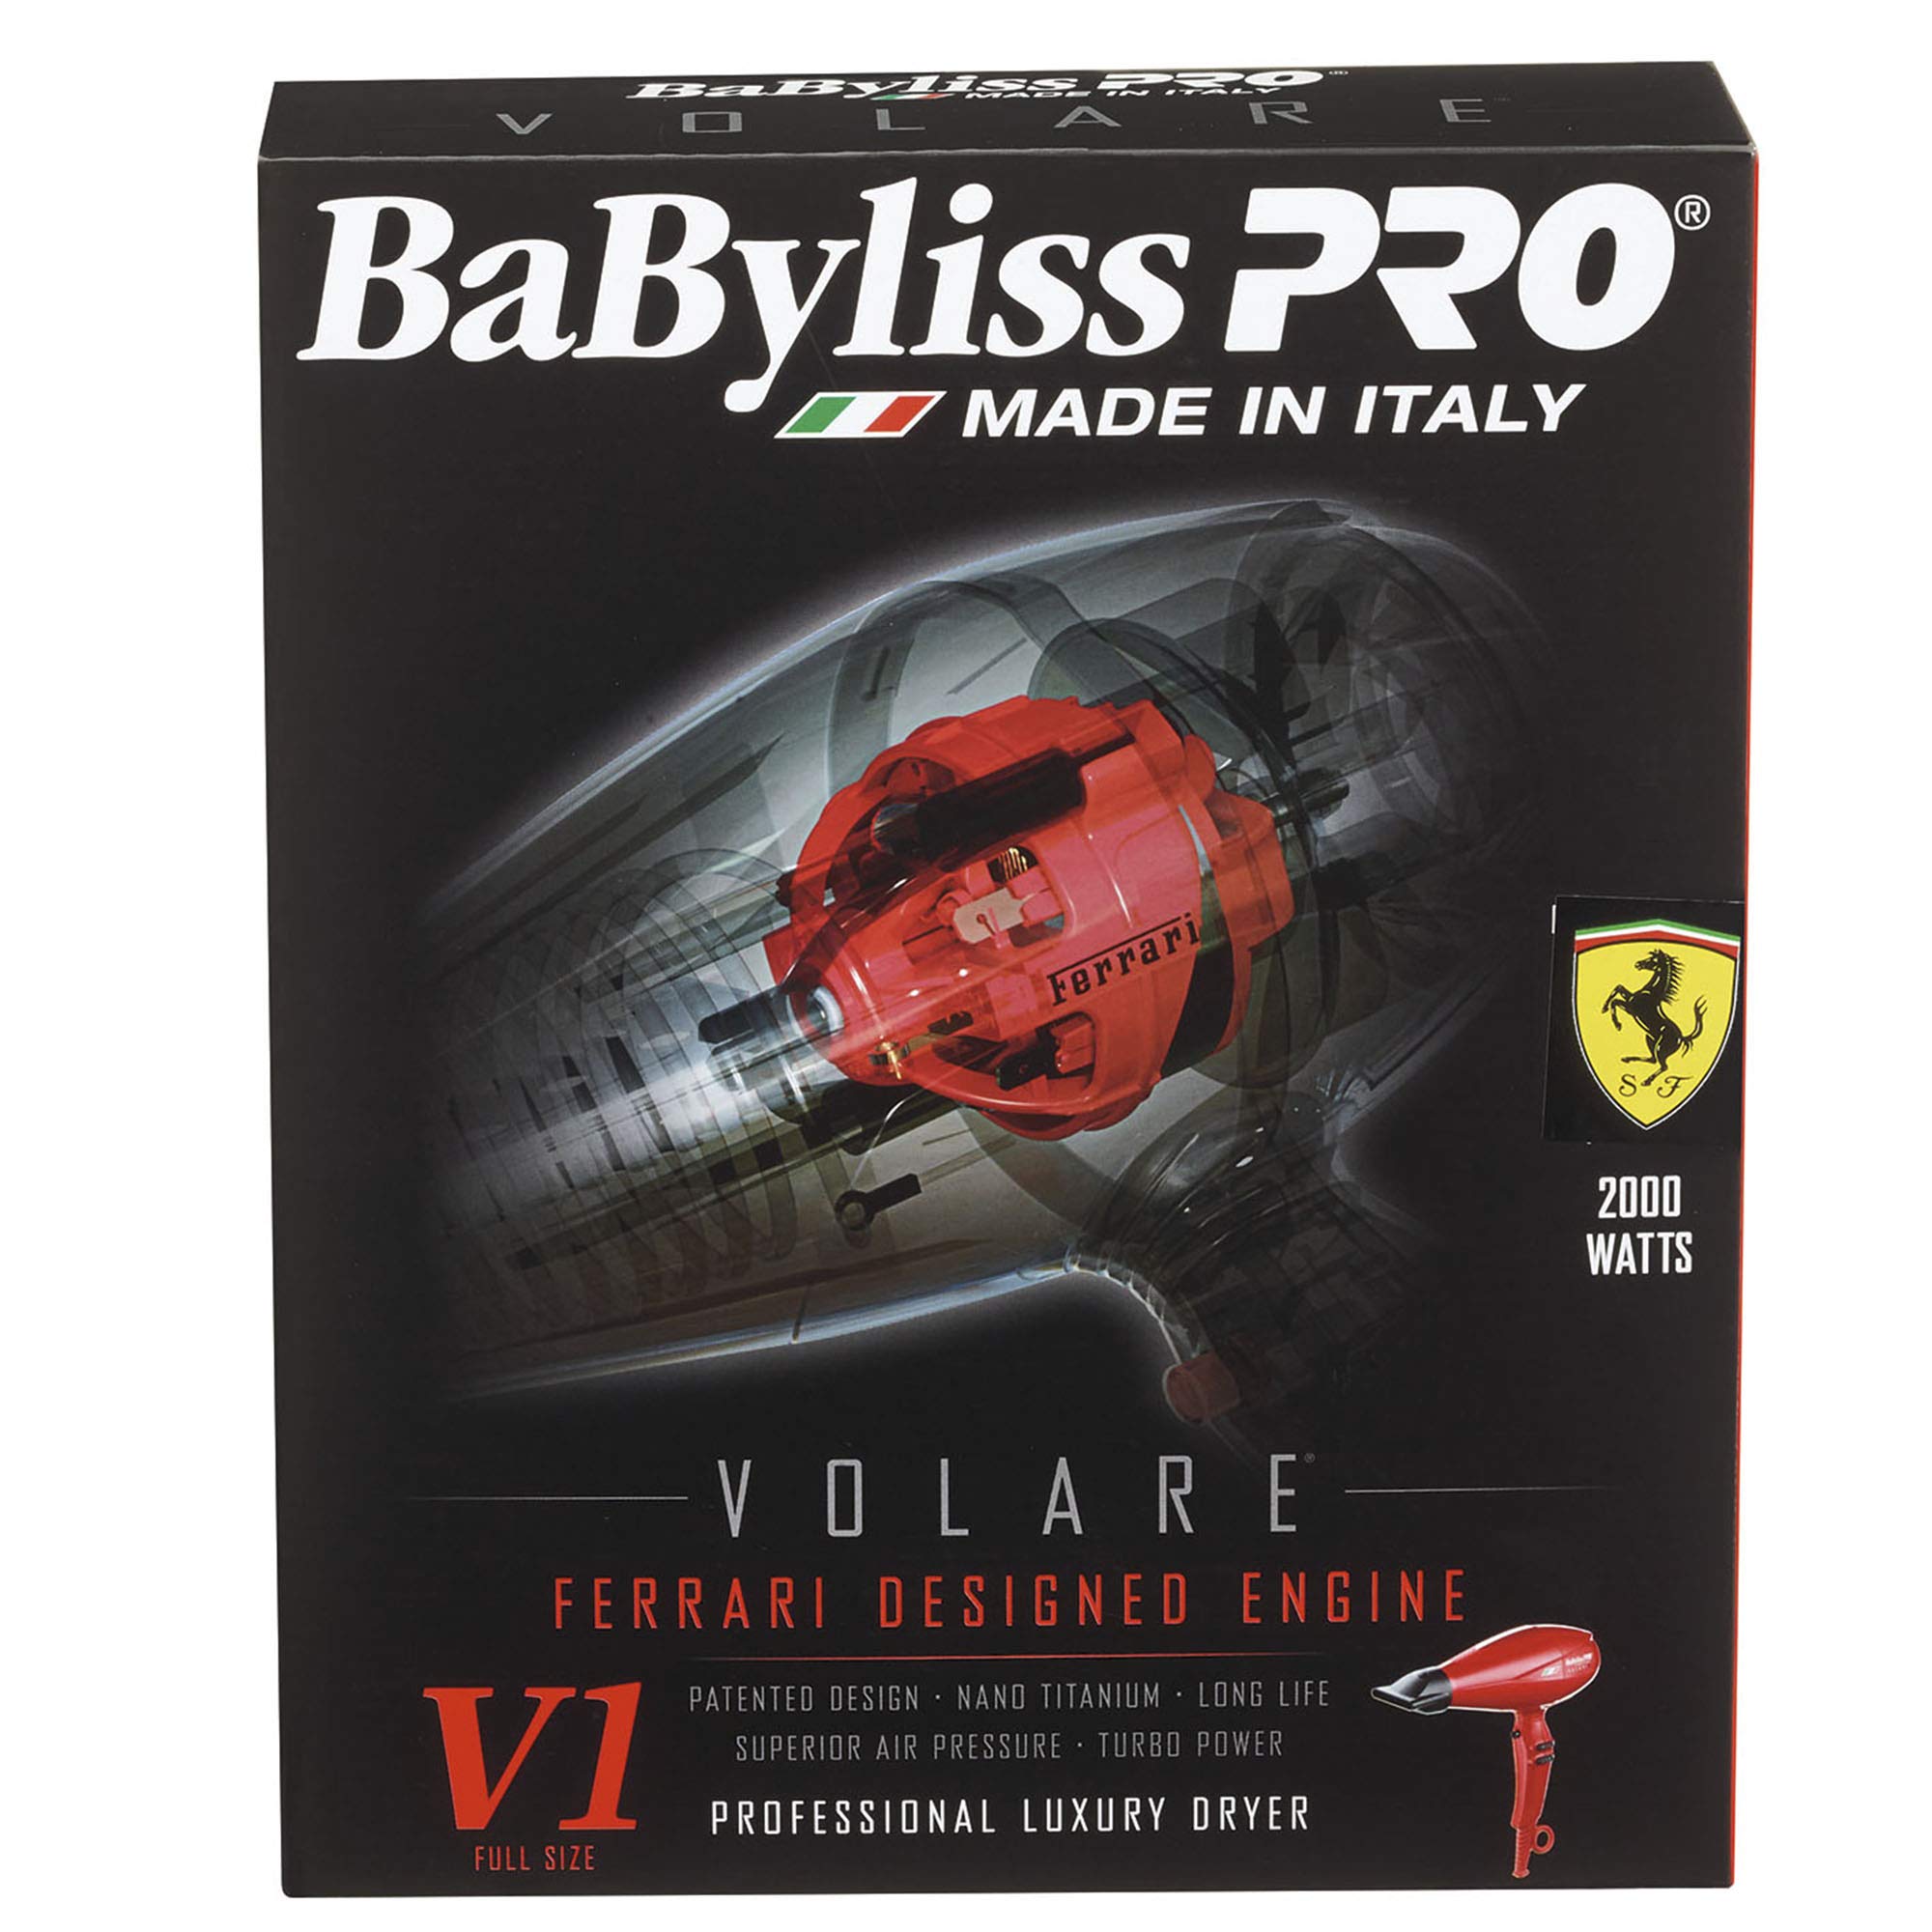 BaBylissPRO Ionic & Nano-Titanium Volare V1 Hairdryer with Ferrari Designed Engine- Red